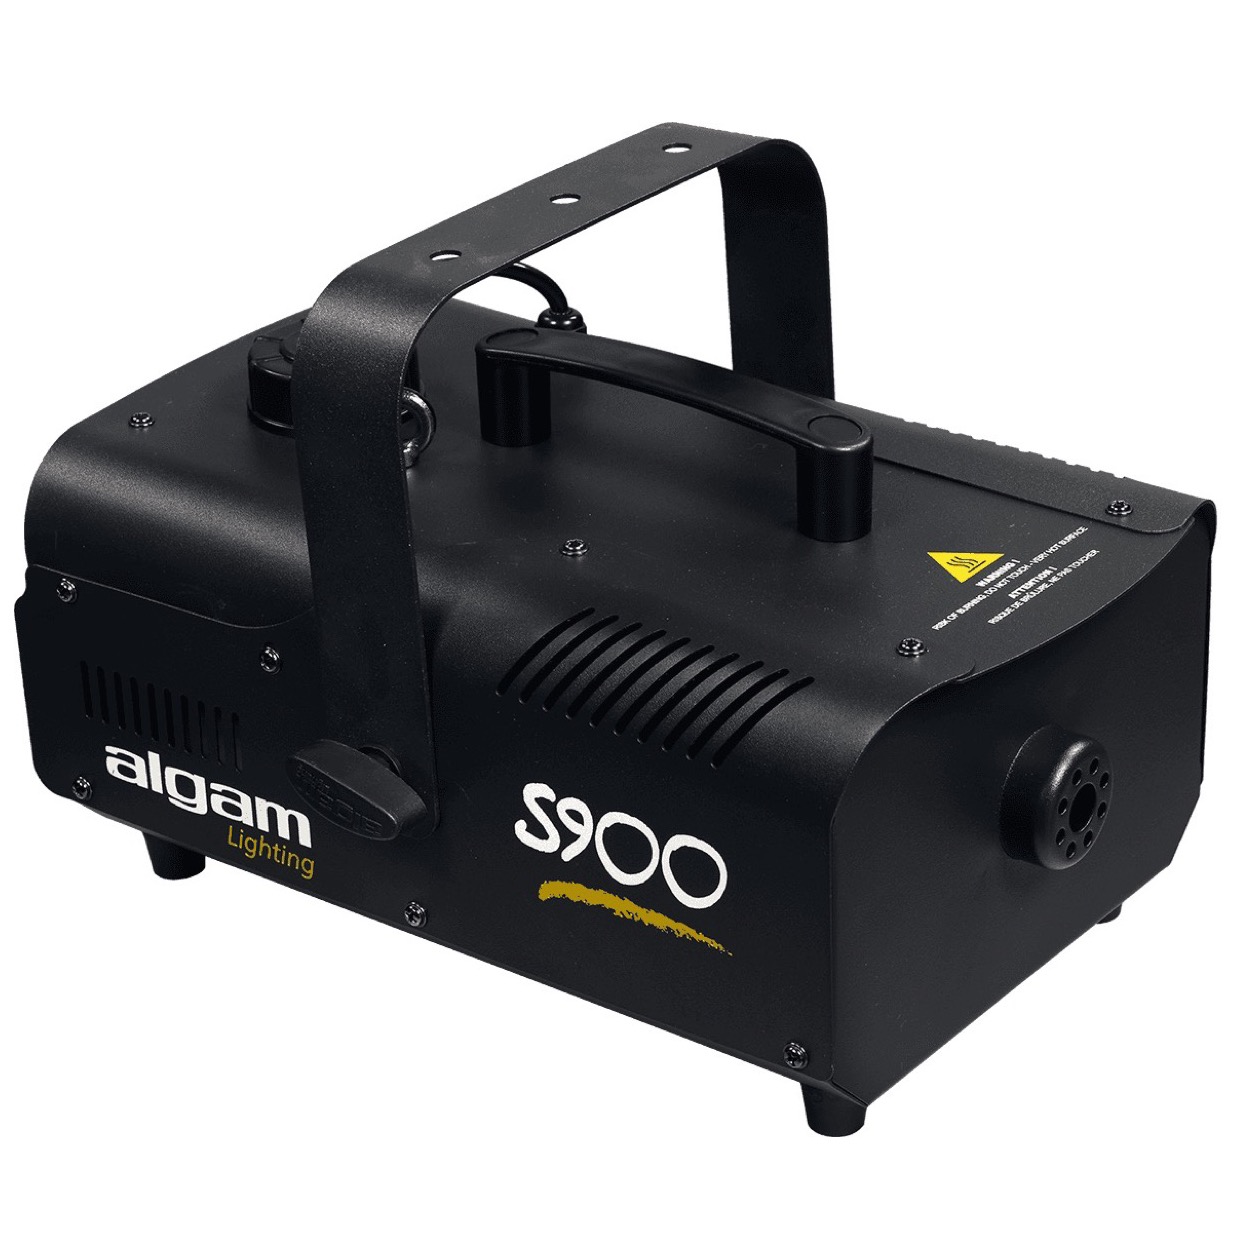 Algam Lighting S 900 / S900 Rookmachine